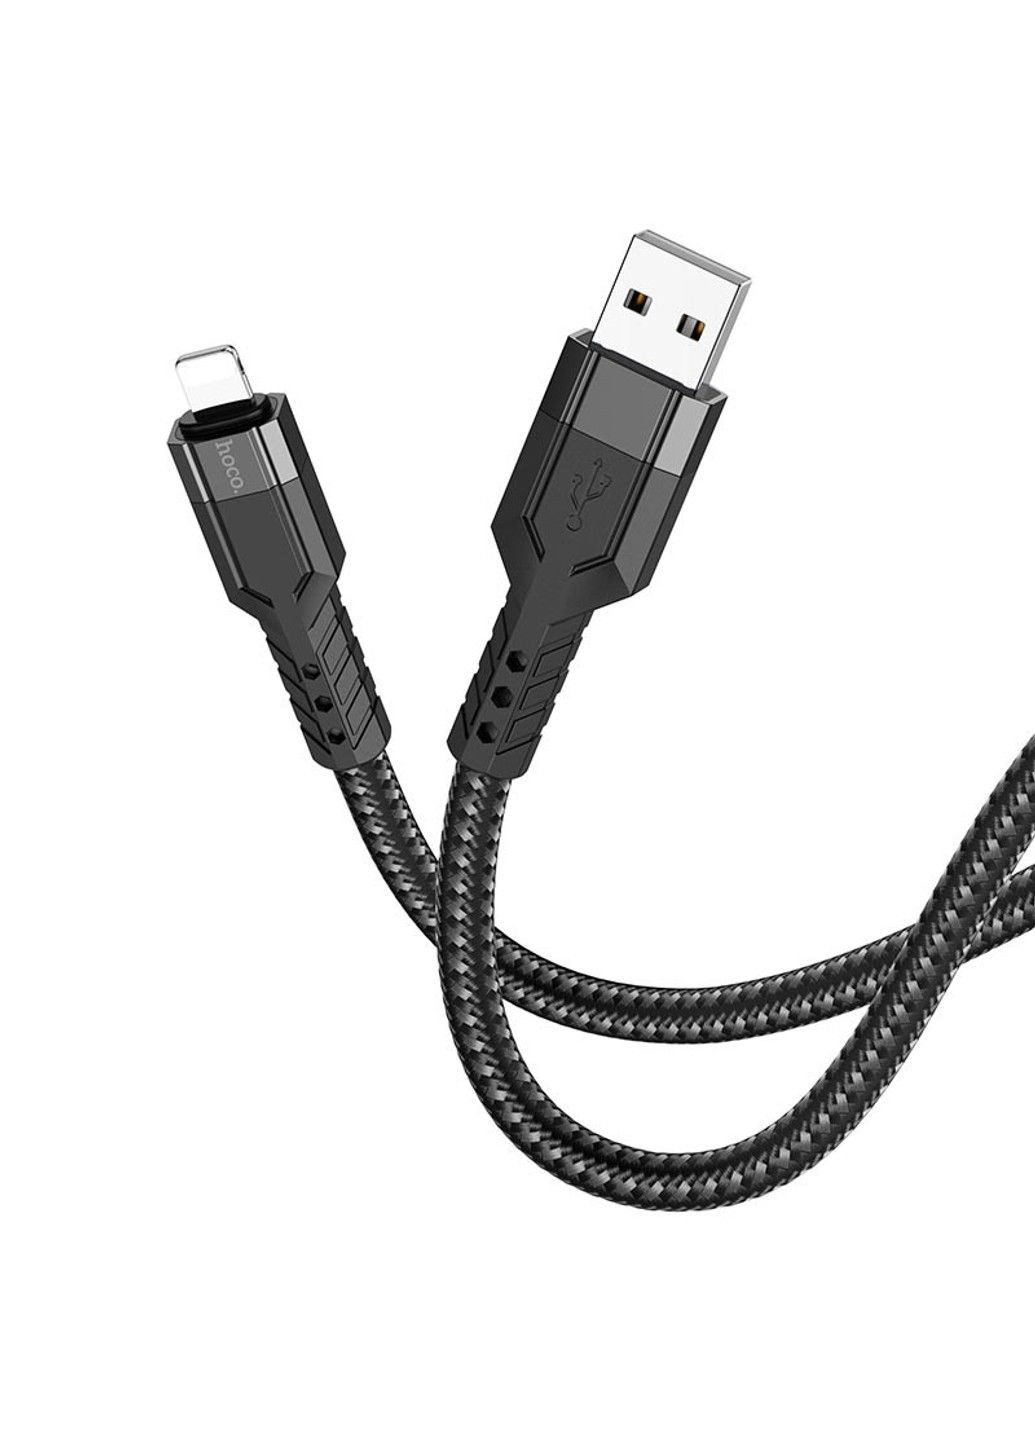 Дата кабель U110 charging data sync USB to Lightning (1.2 m) Hoco (291879711)